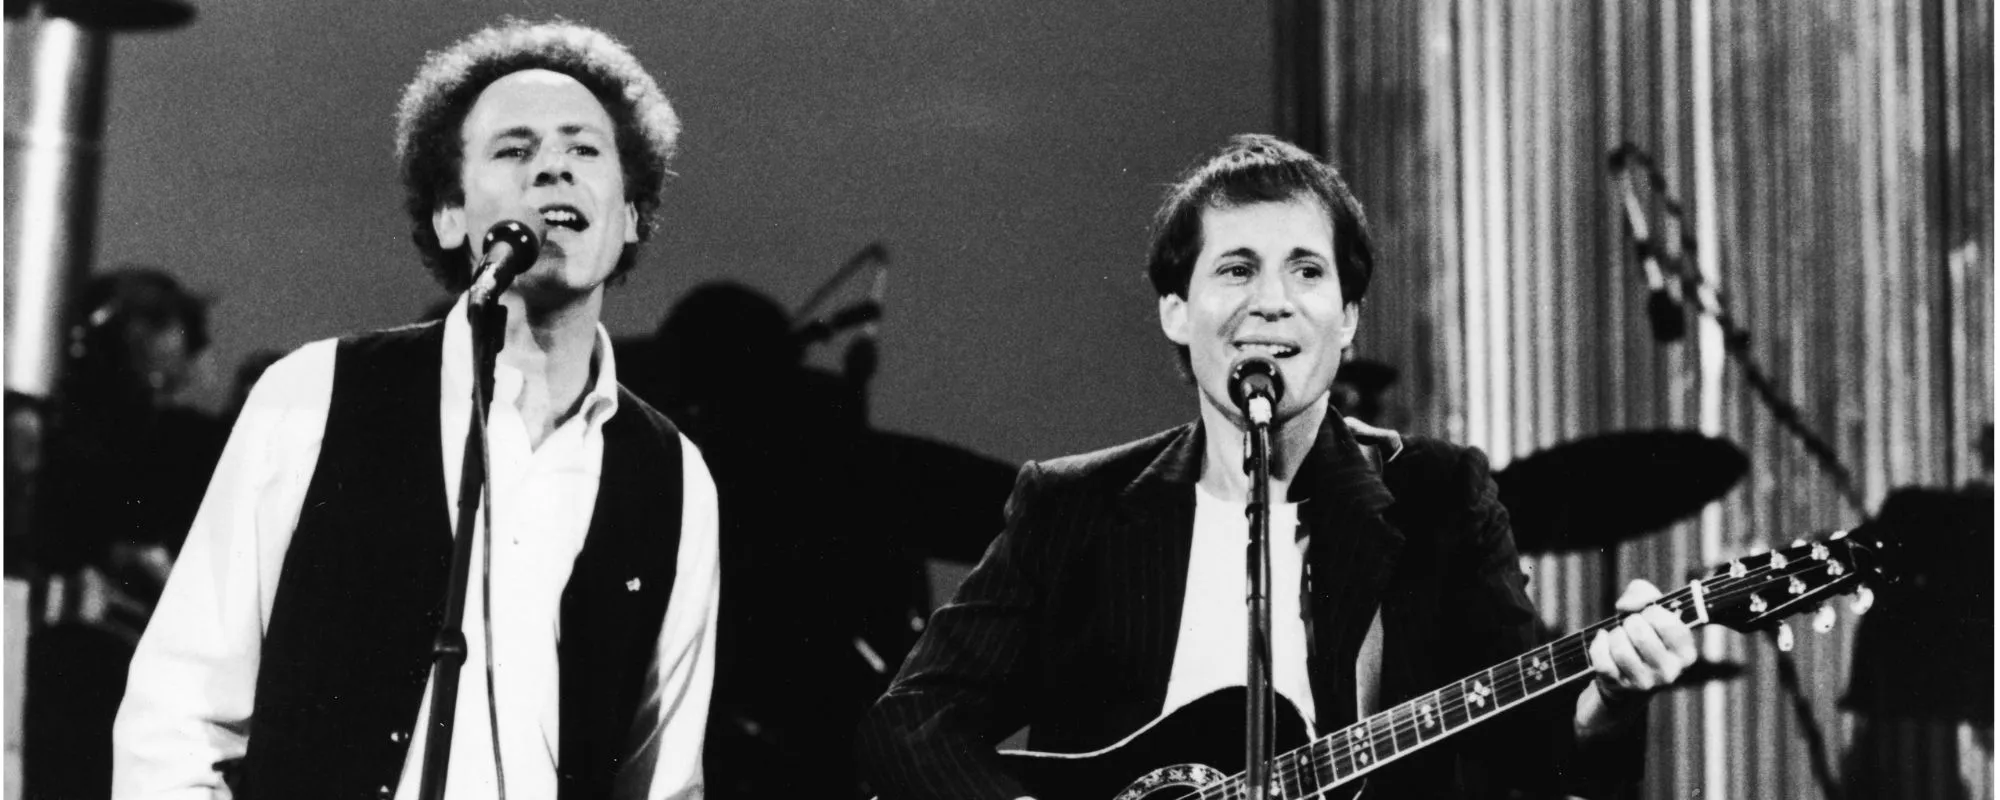 The Harmonious, Combative Story Behind the Songwriting Duo Simon & Garfunkel